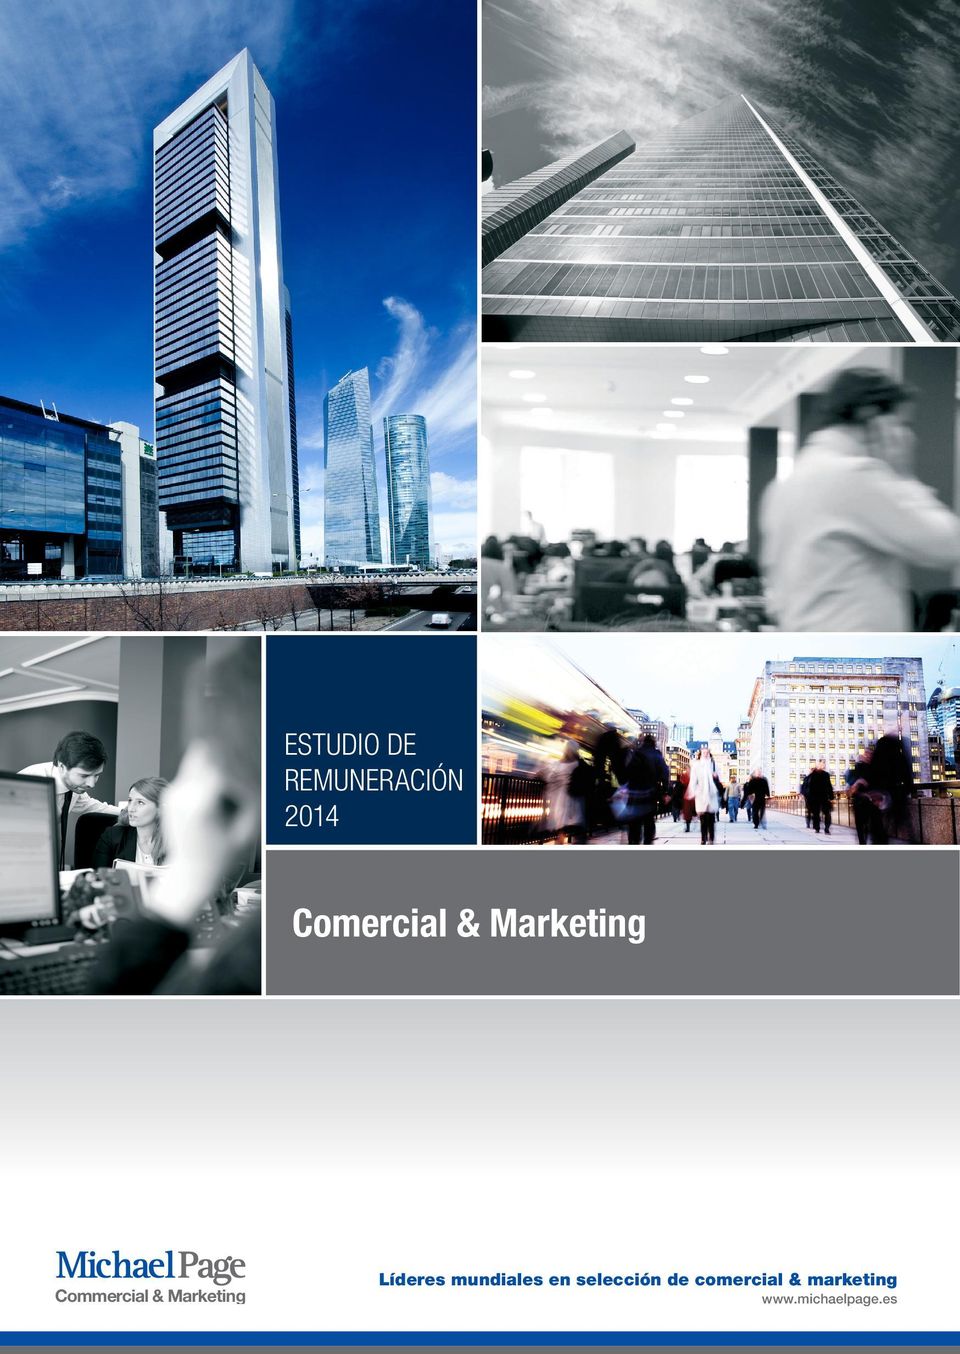 Comercial Life Sciences Commercial & Marketing Líderes